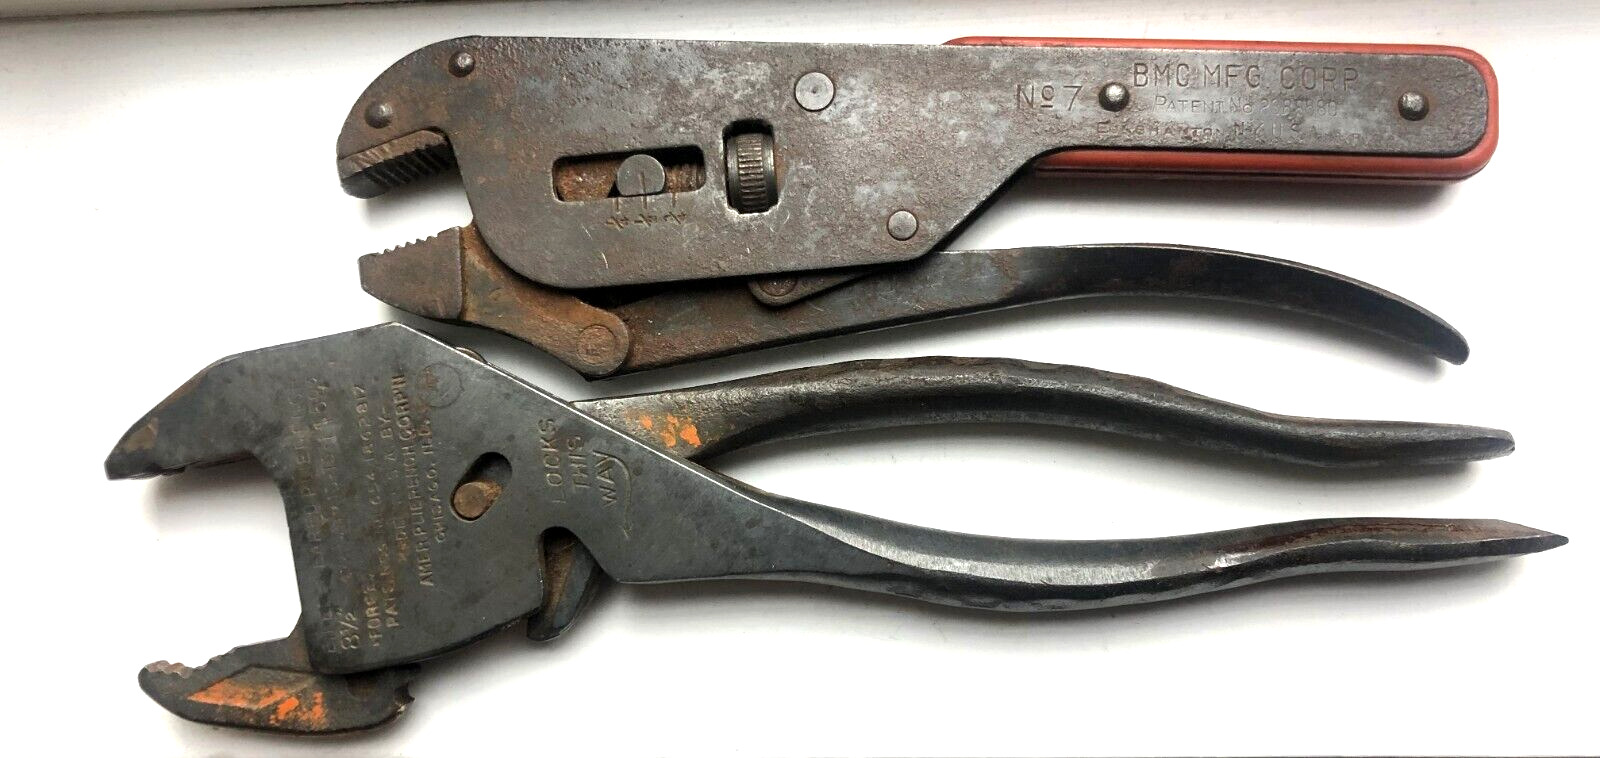 Antique Eifel Pleirench and BMC MFG Corp No. 7 Adjustable Locking Pliers